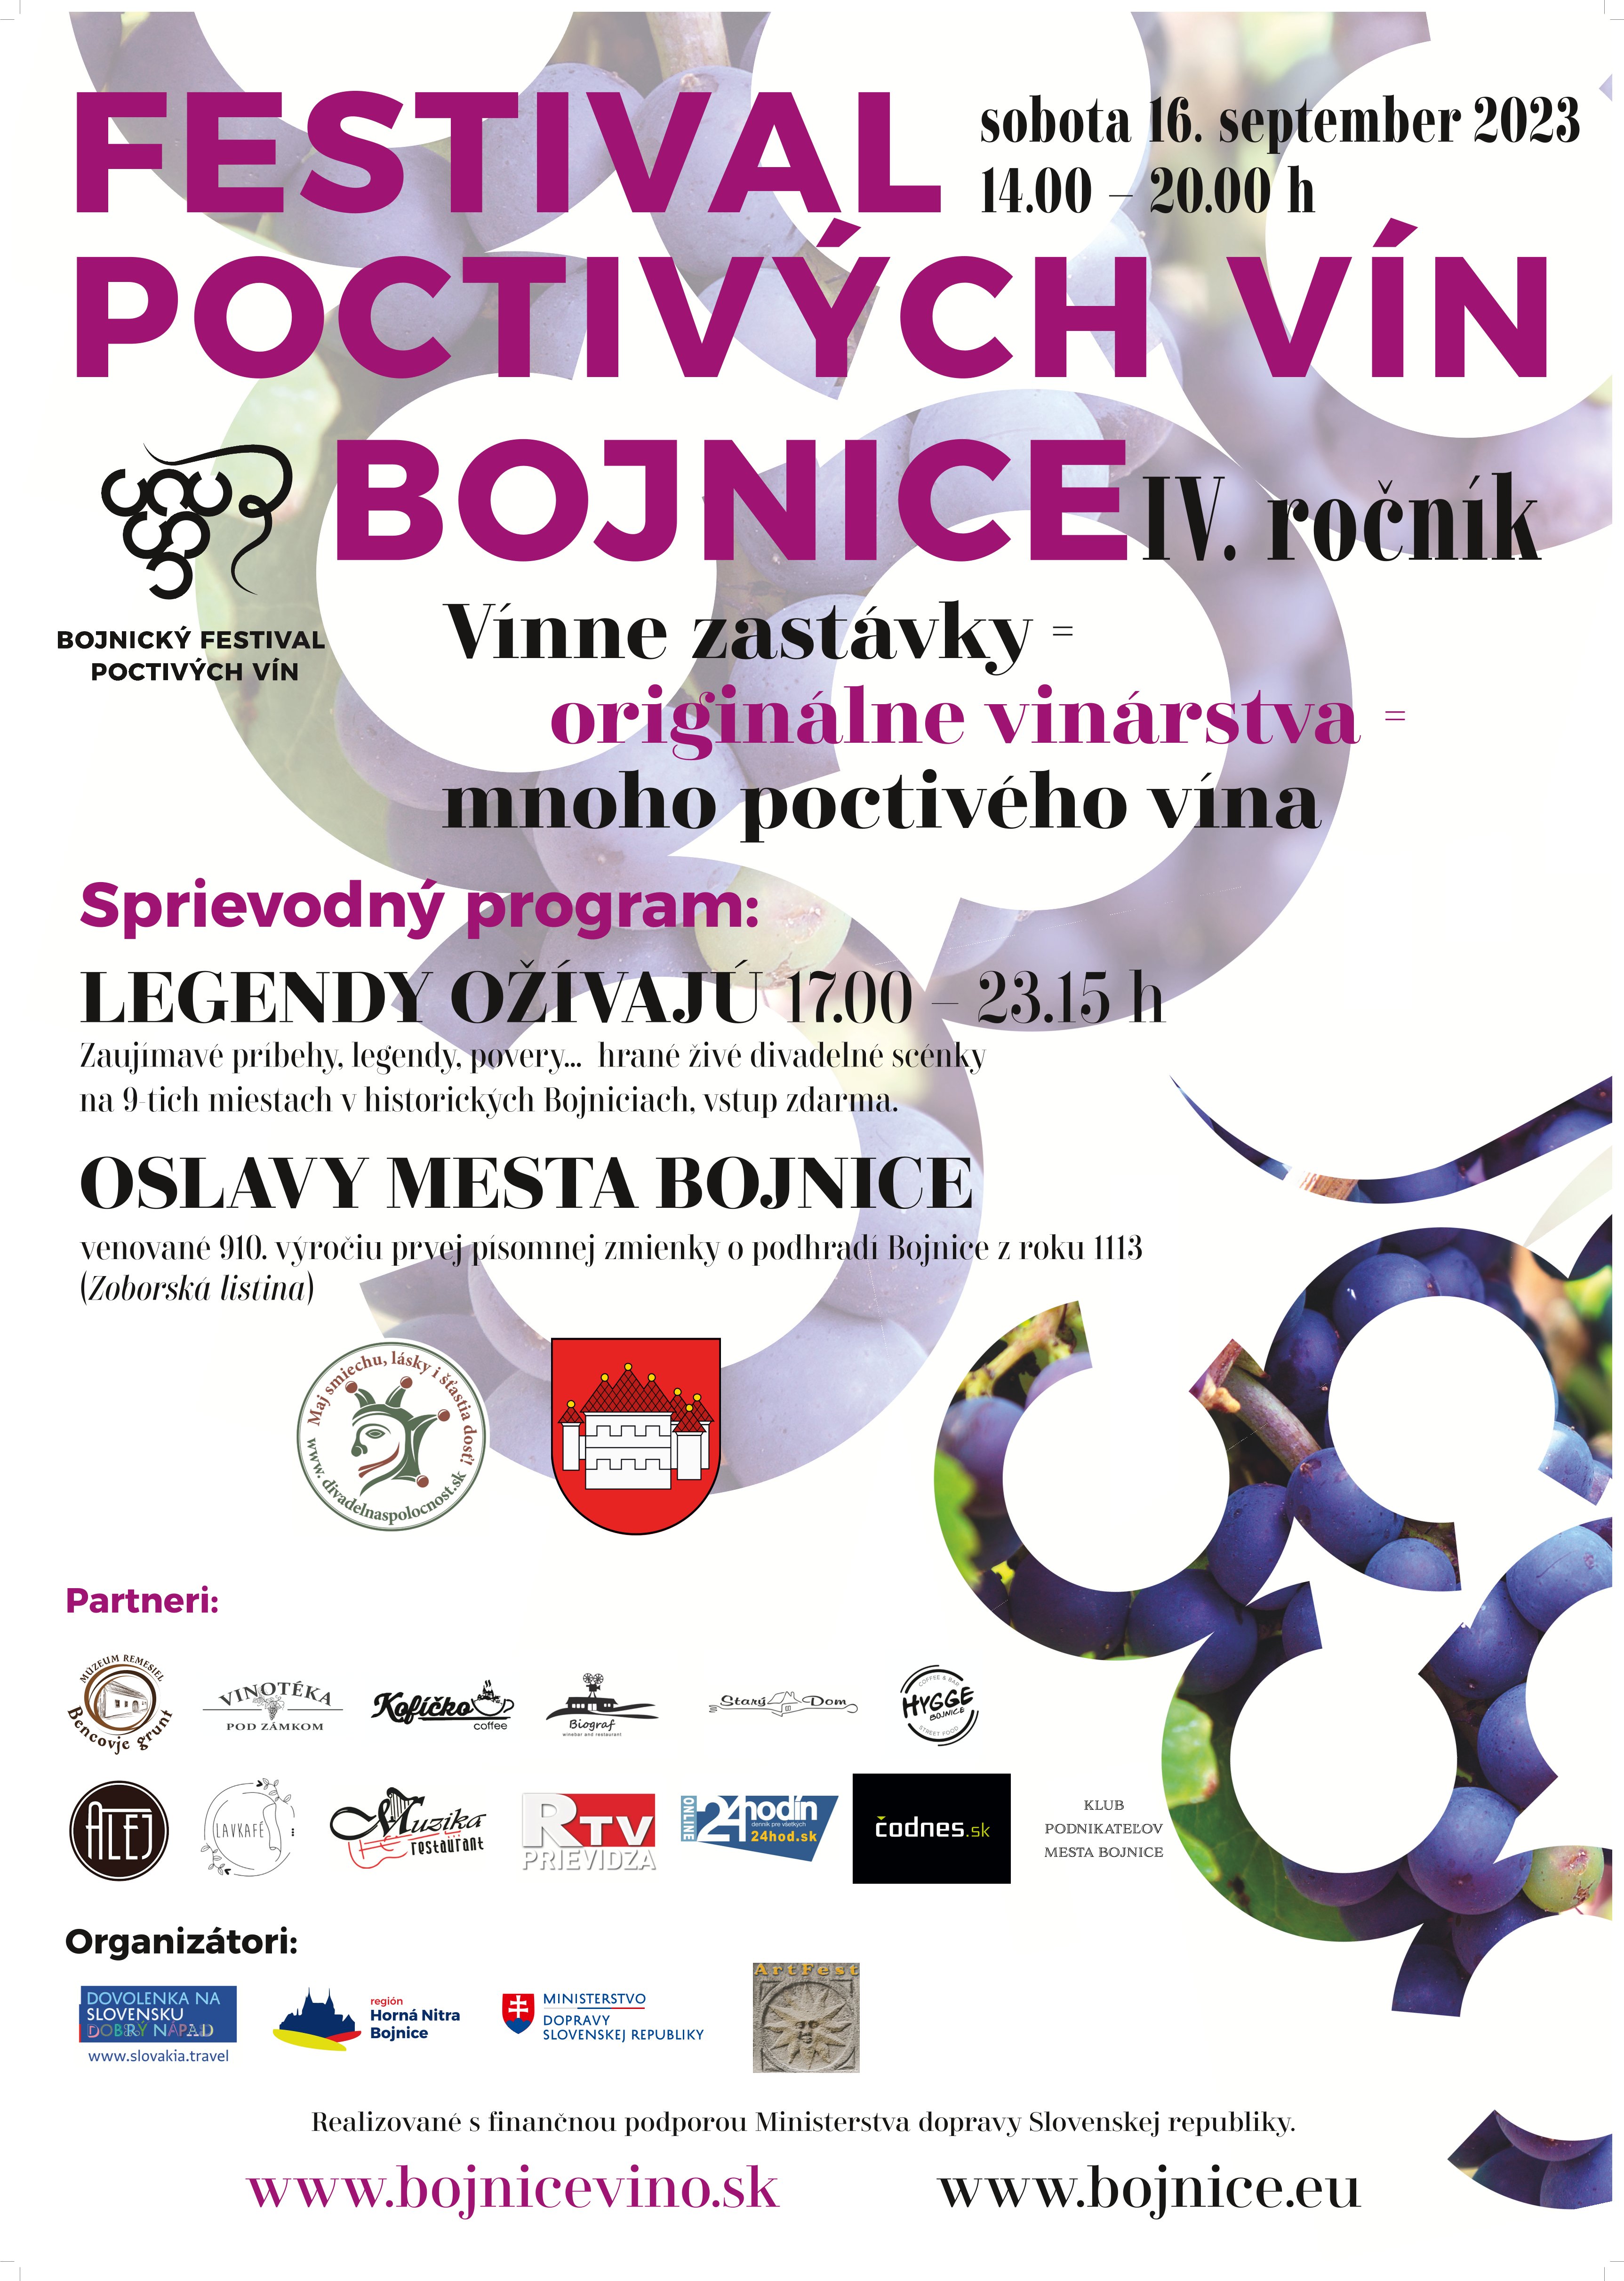 Bojnick festival poctivch vn 2023 - 4. ronk